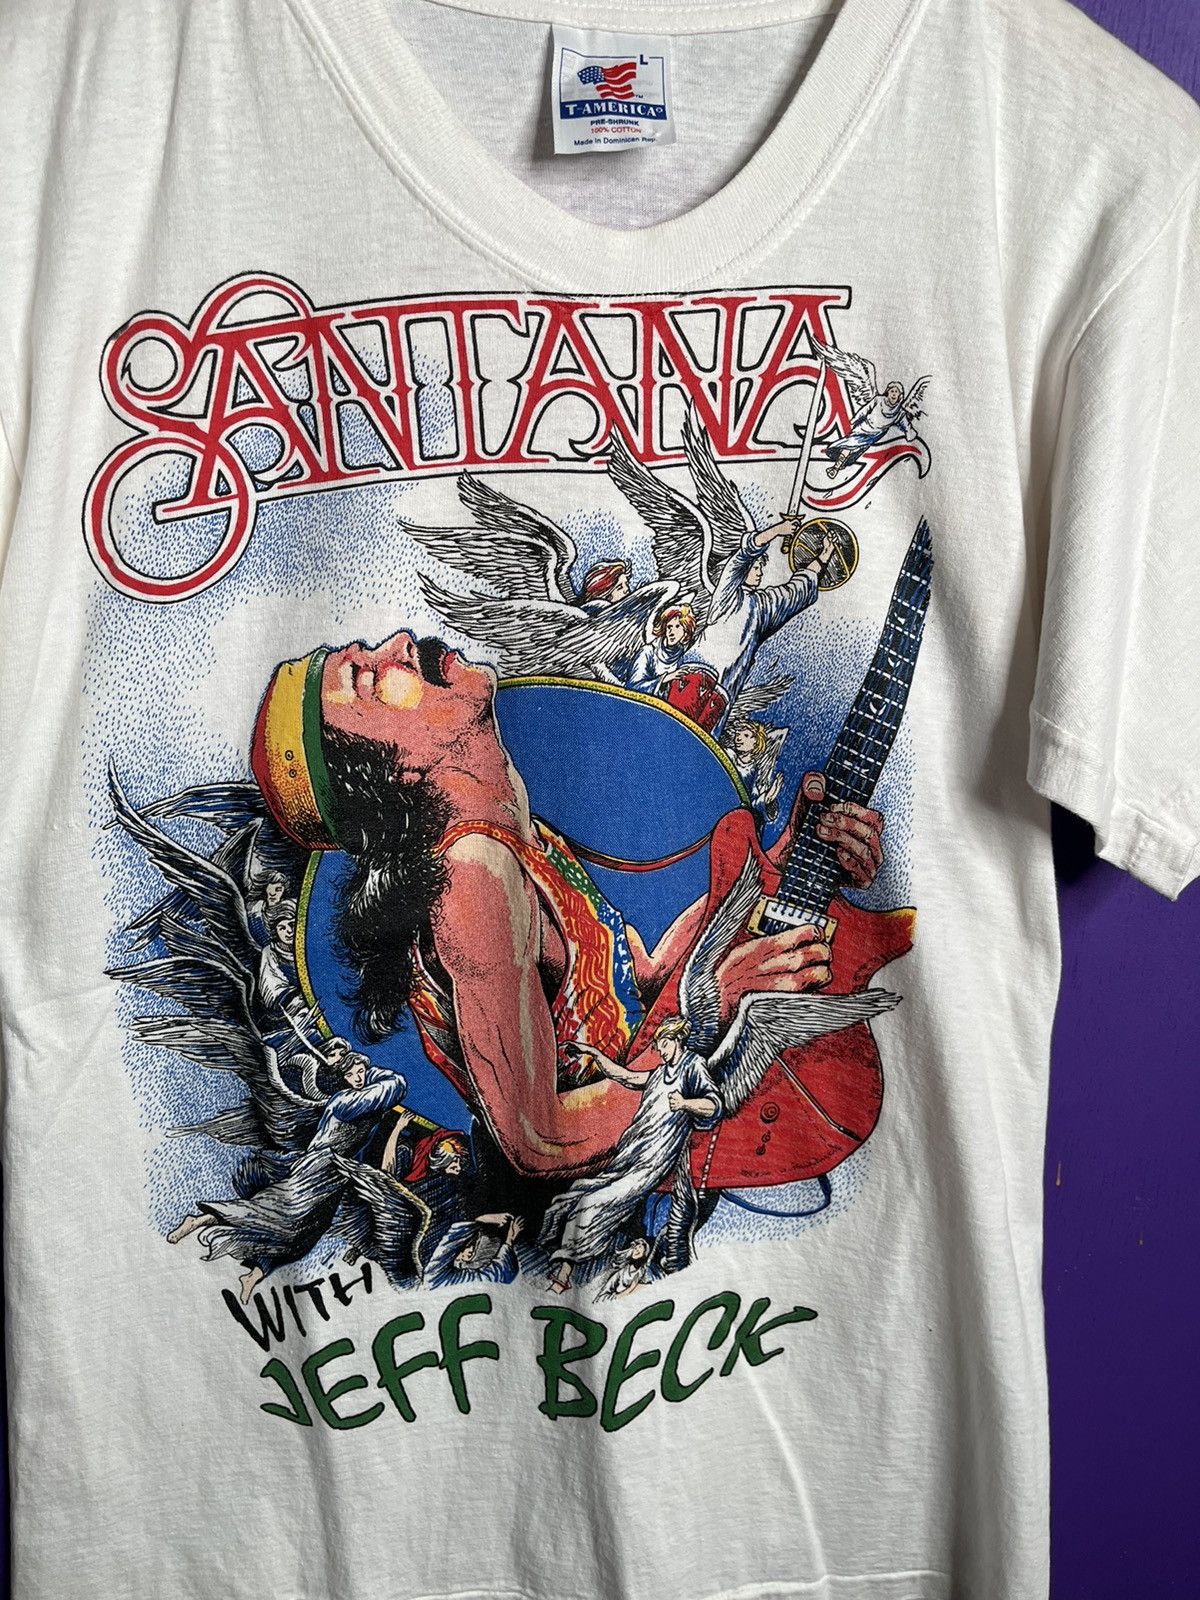 Vintage Vintage 1995 Santana with Jeff beck tour t-shirt Size US M / EU 48-50 / 2 - 3 Thumbnail